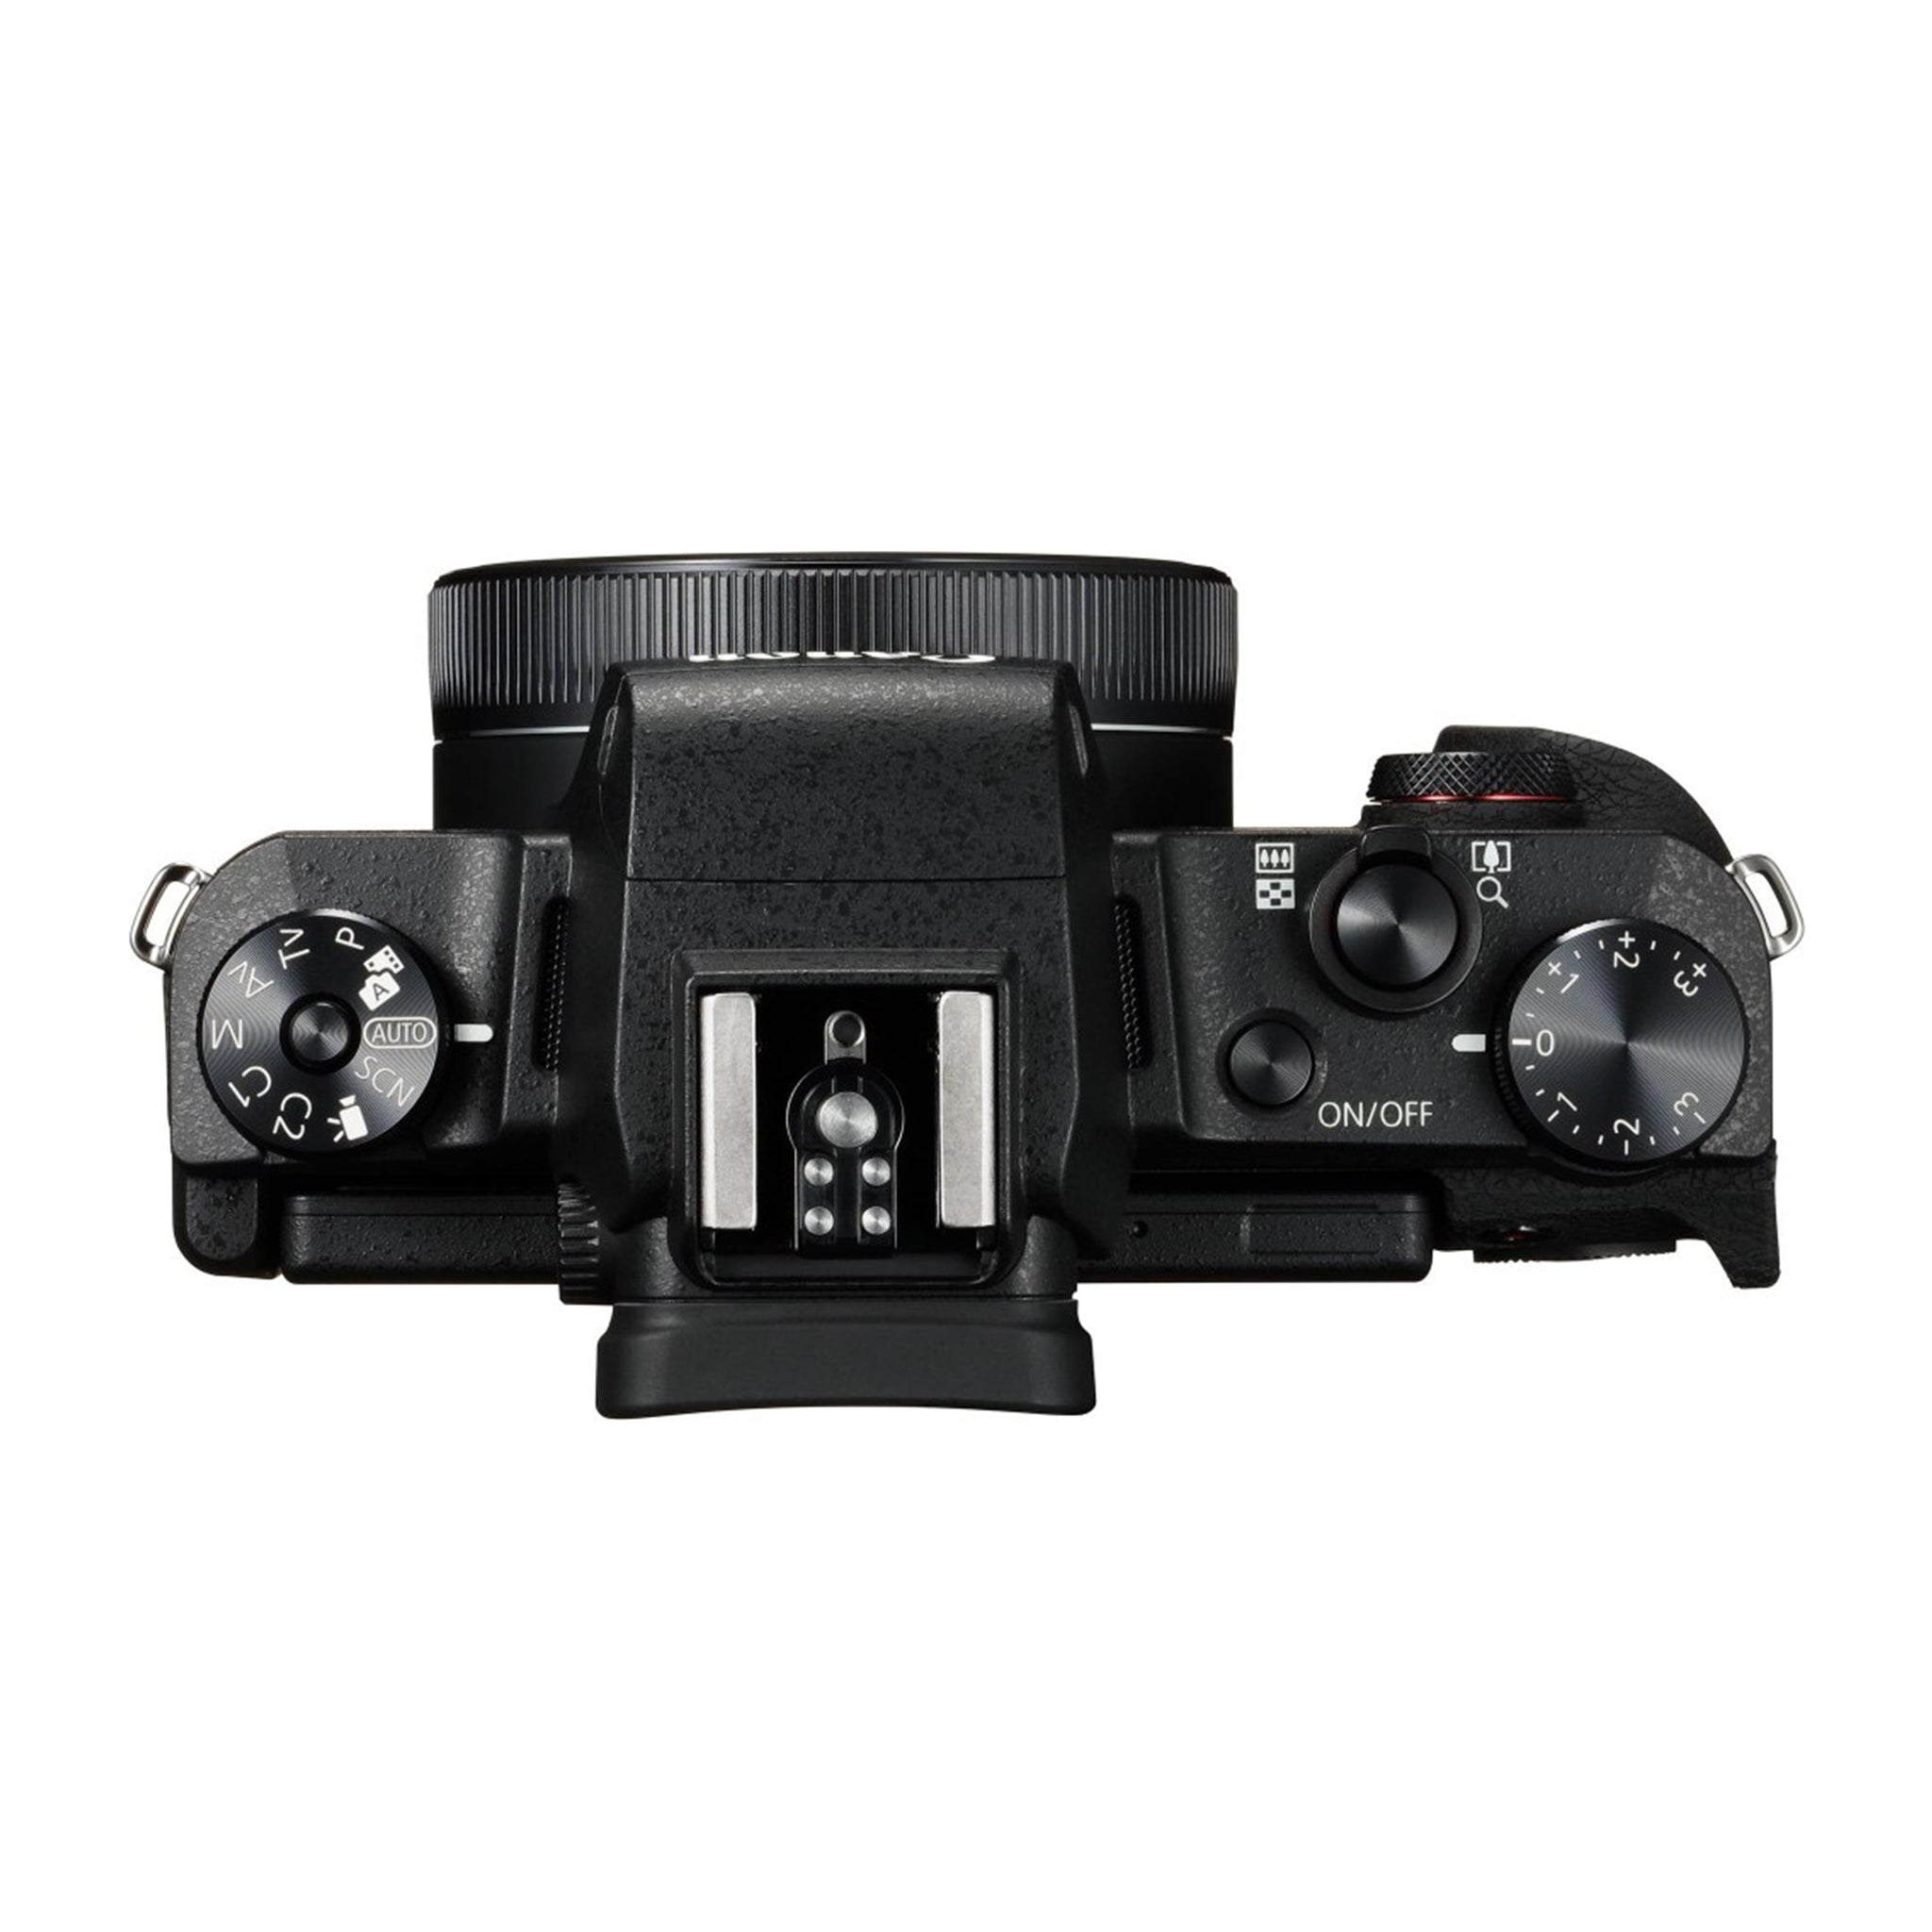 Canon PowerShot G1 X Mark III Camera